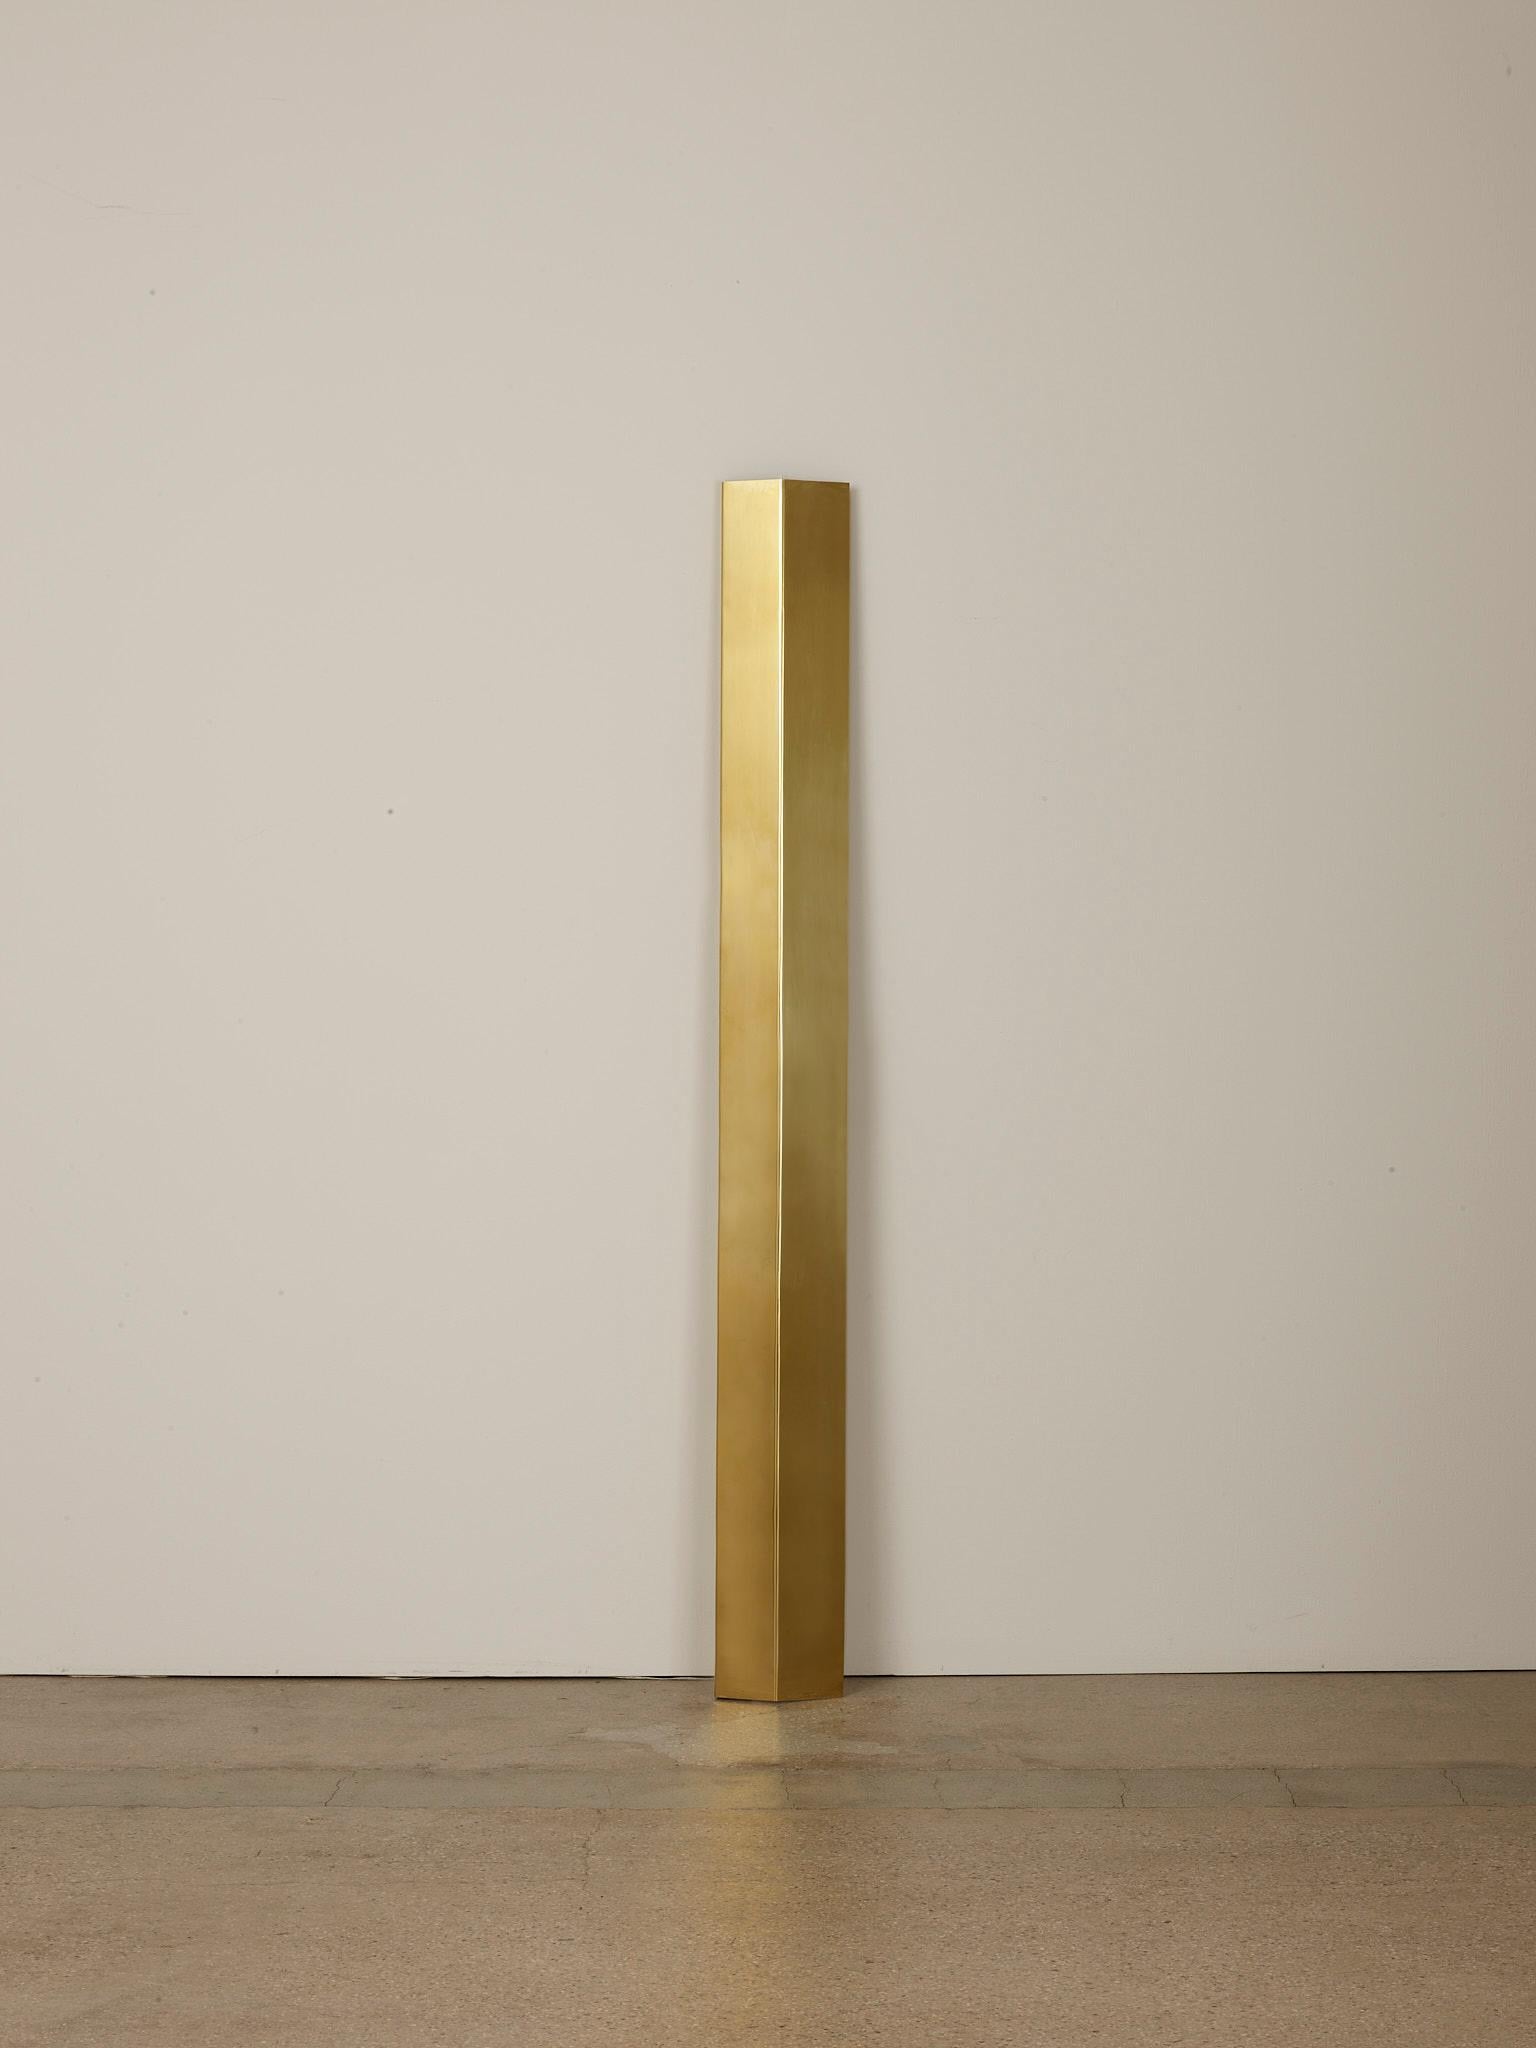 Lampe de 6 pieds Leaning Mano par Umberto Bellardi Ricci.
Dimensions : D 7 